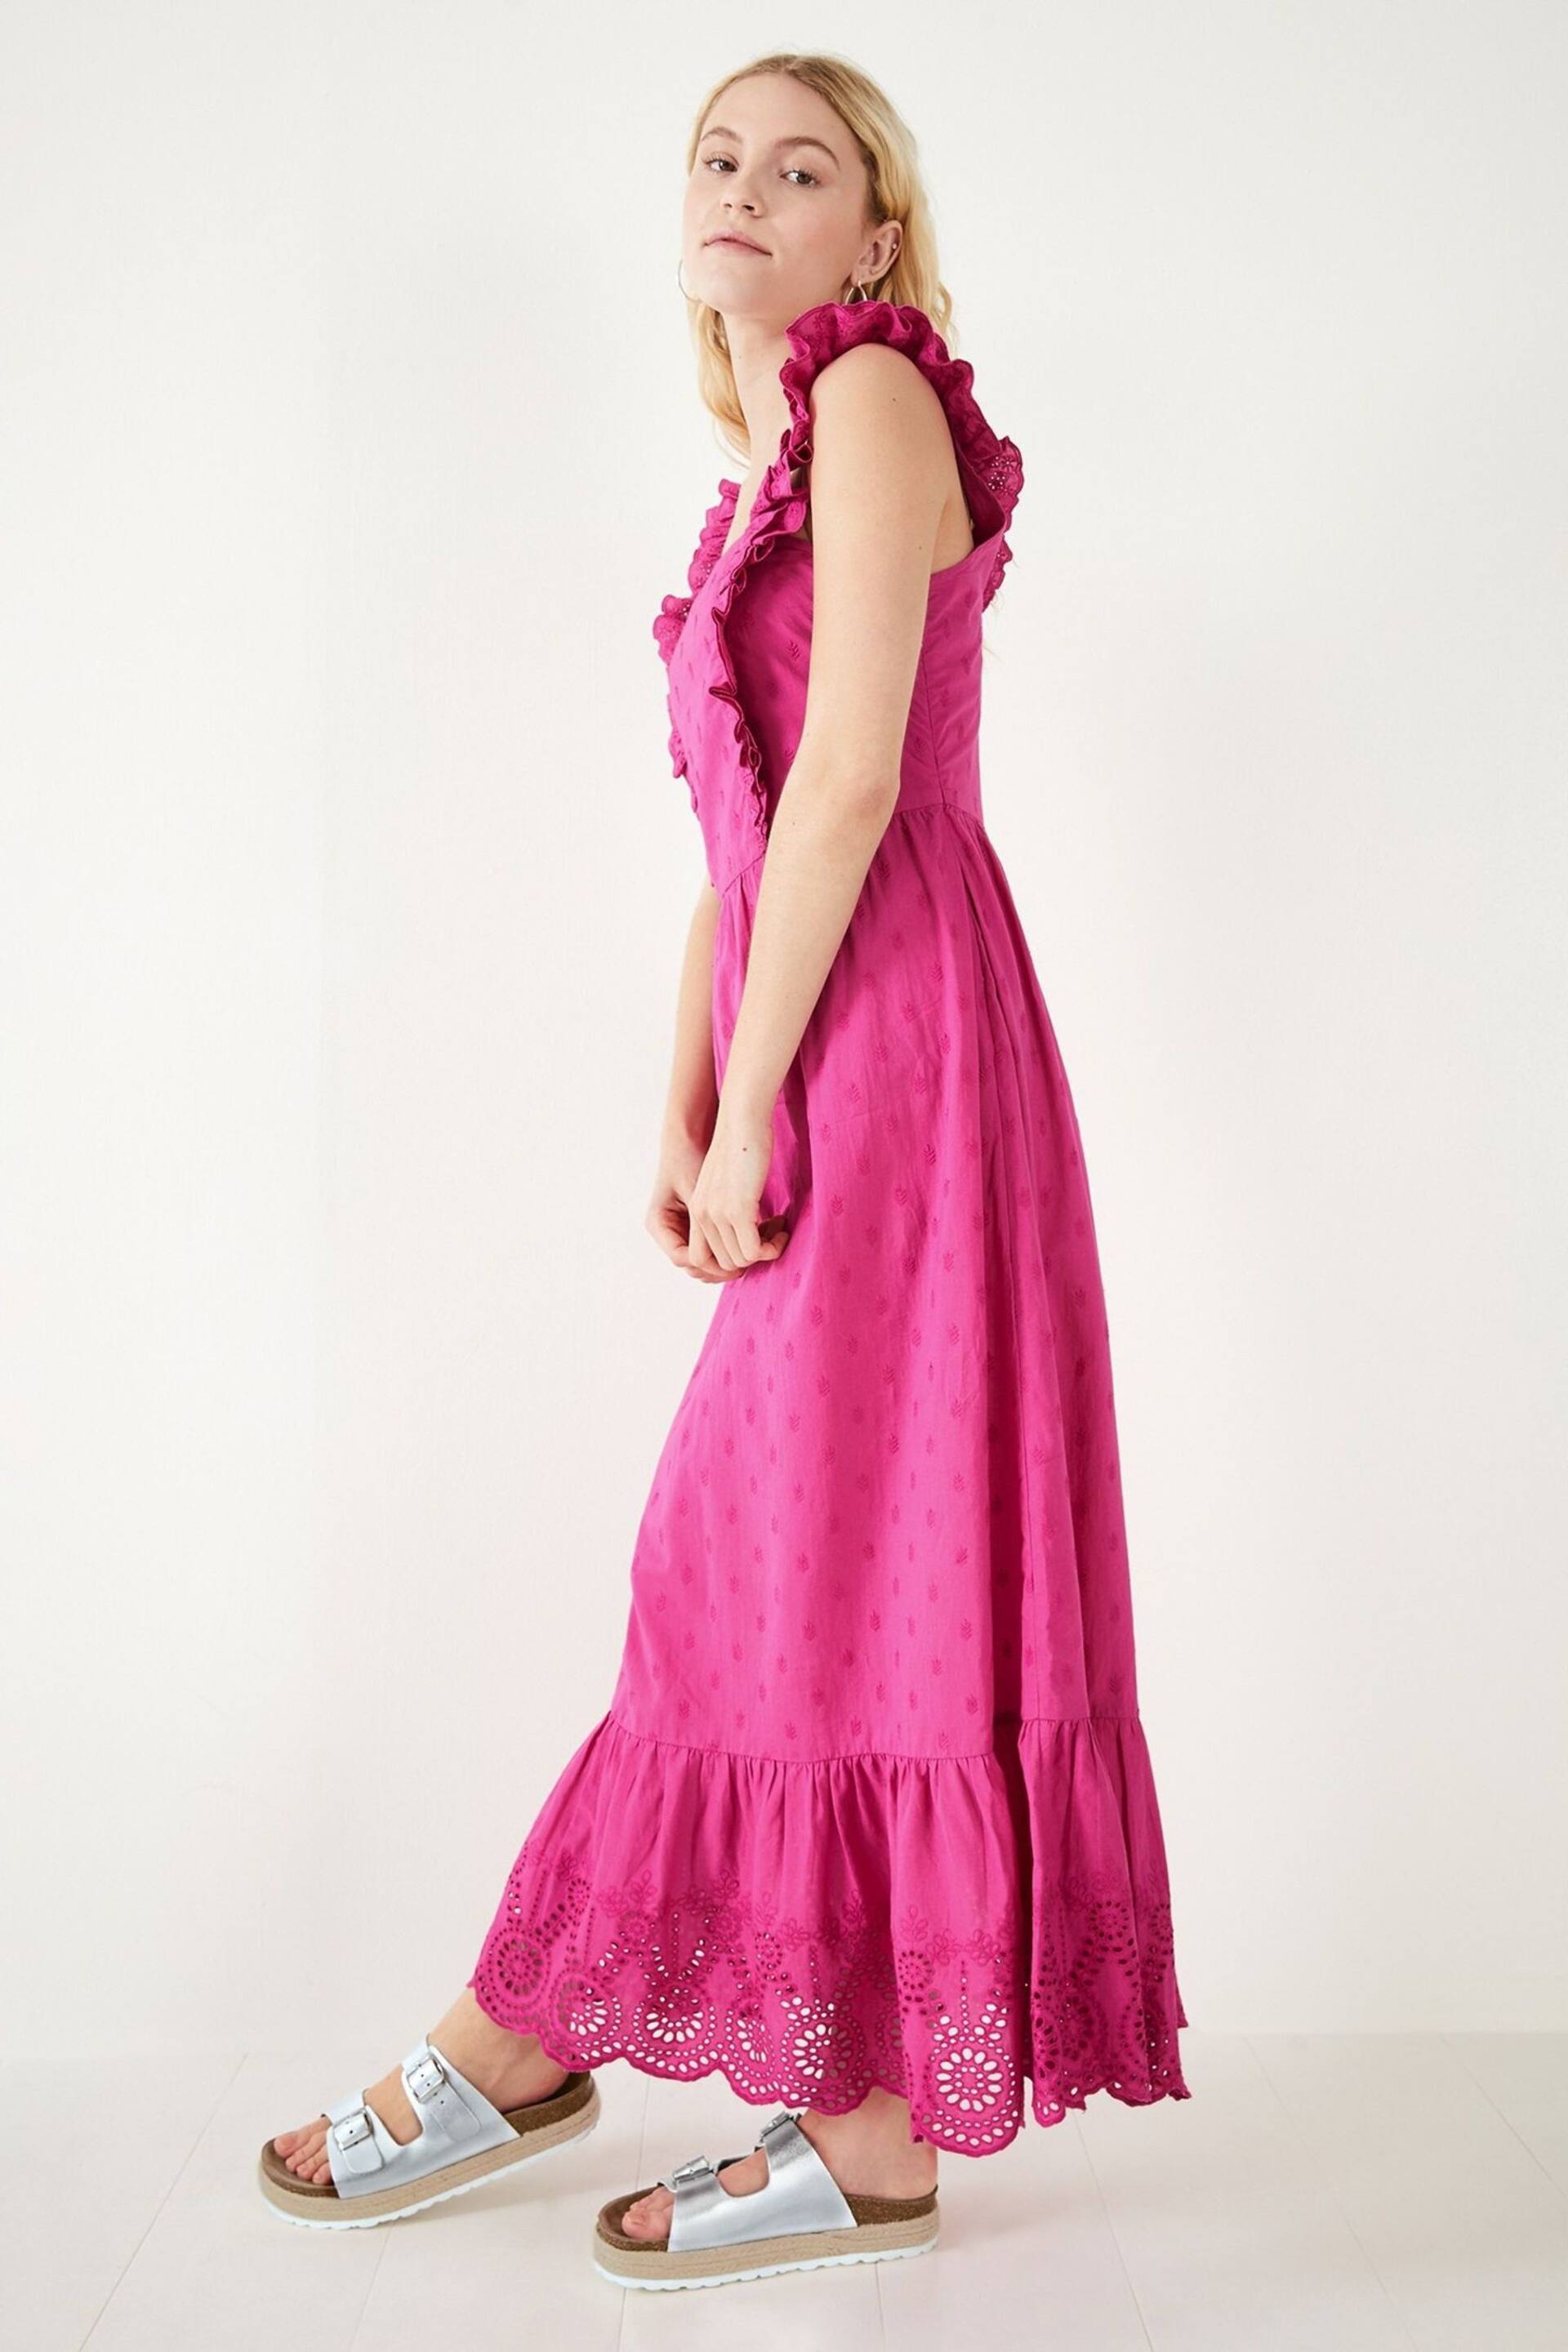 Hush Pink Alena Maxi Dress - Image 2 of 5